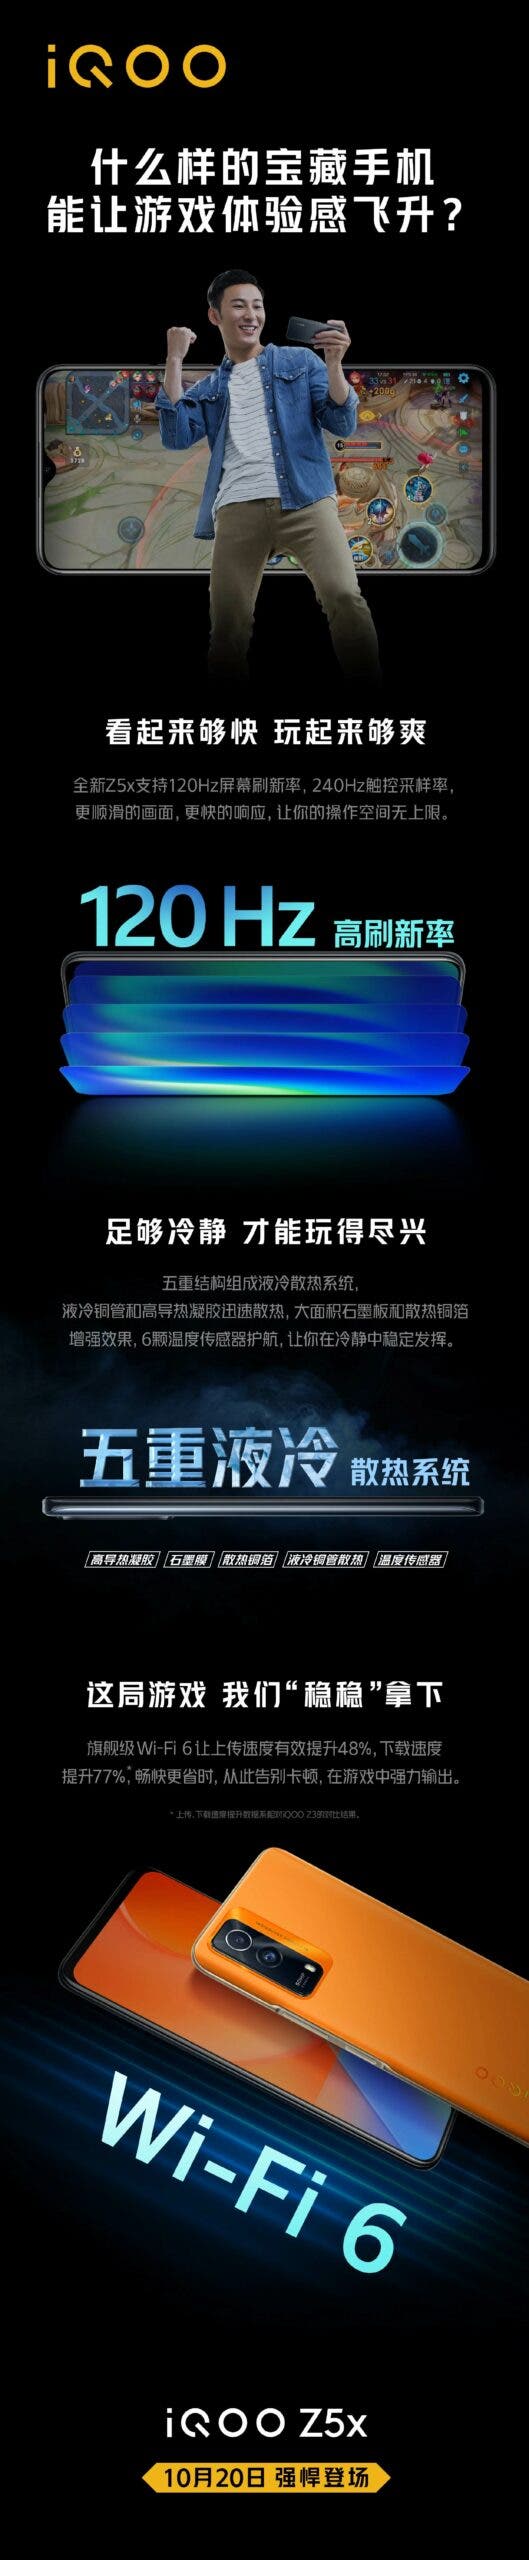 iQOO Z5x 120Hz refresh rate teaser poster